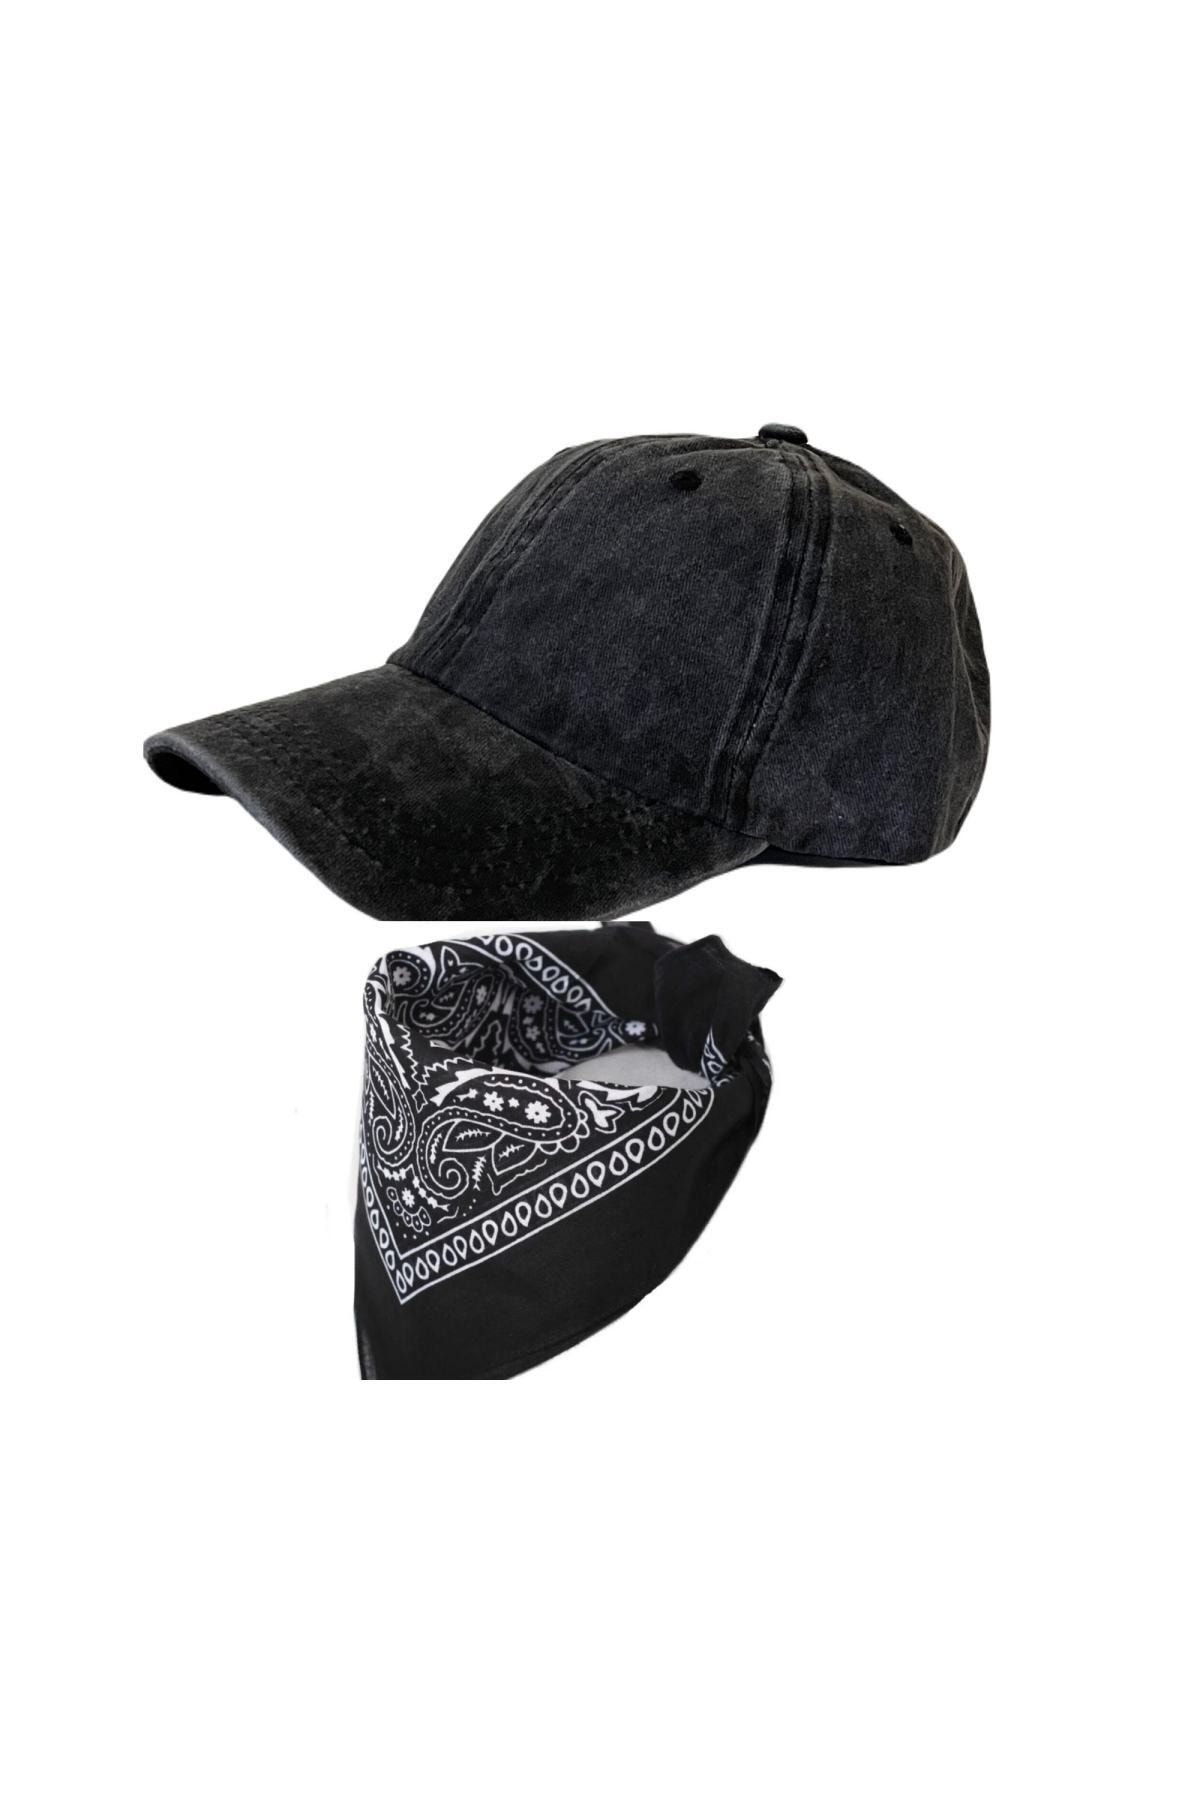 Rupen Kraft Bandana Kombinlidüz Füme Renk Yıkamalı Eskitme Şapka Vintage Şapka